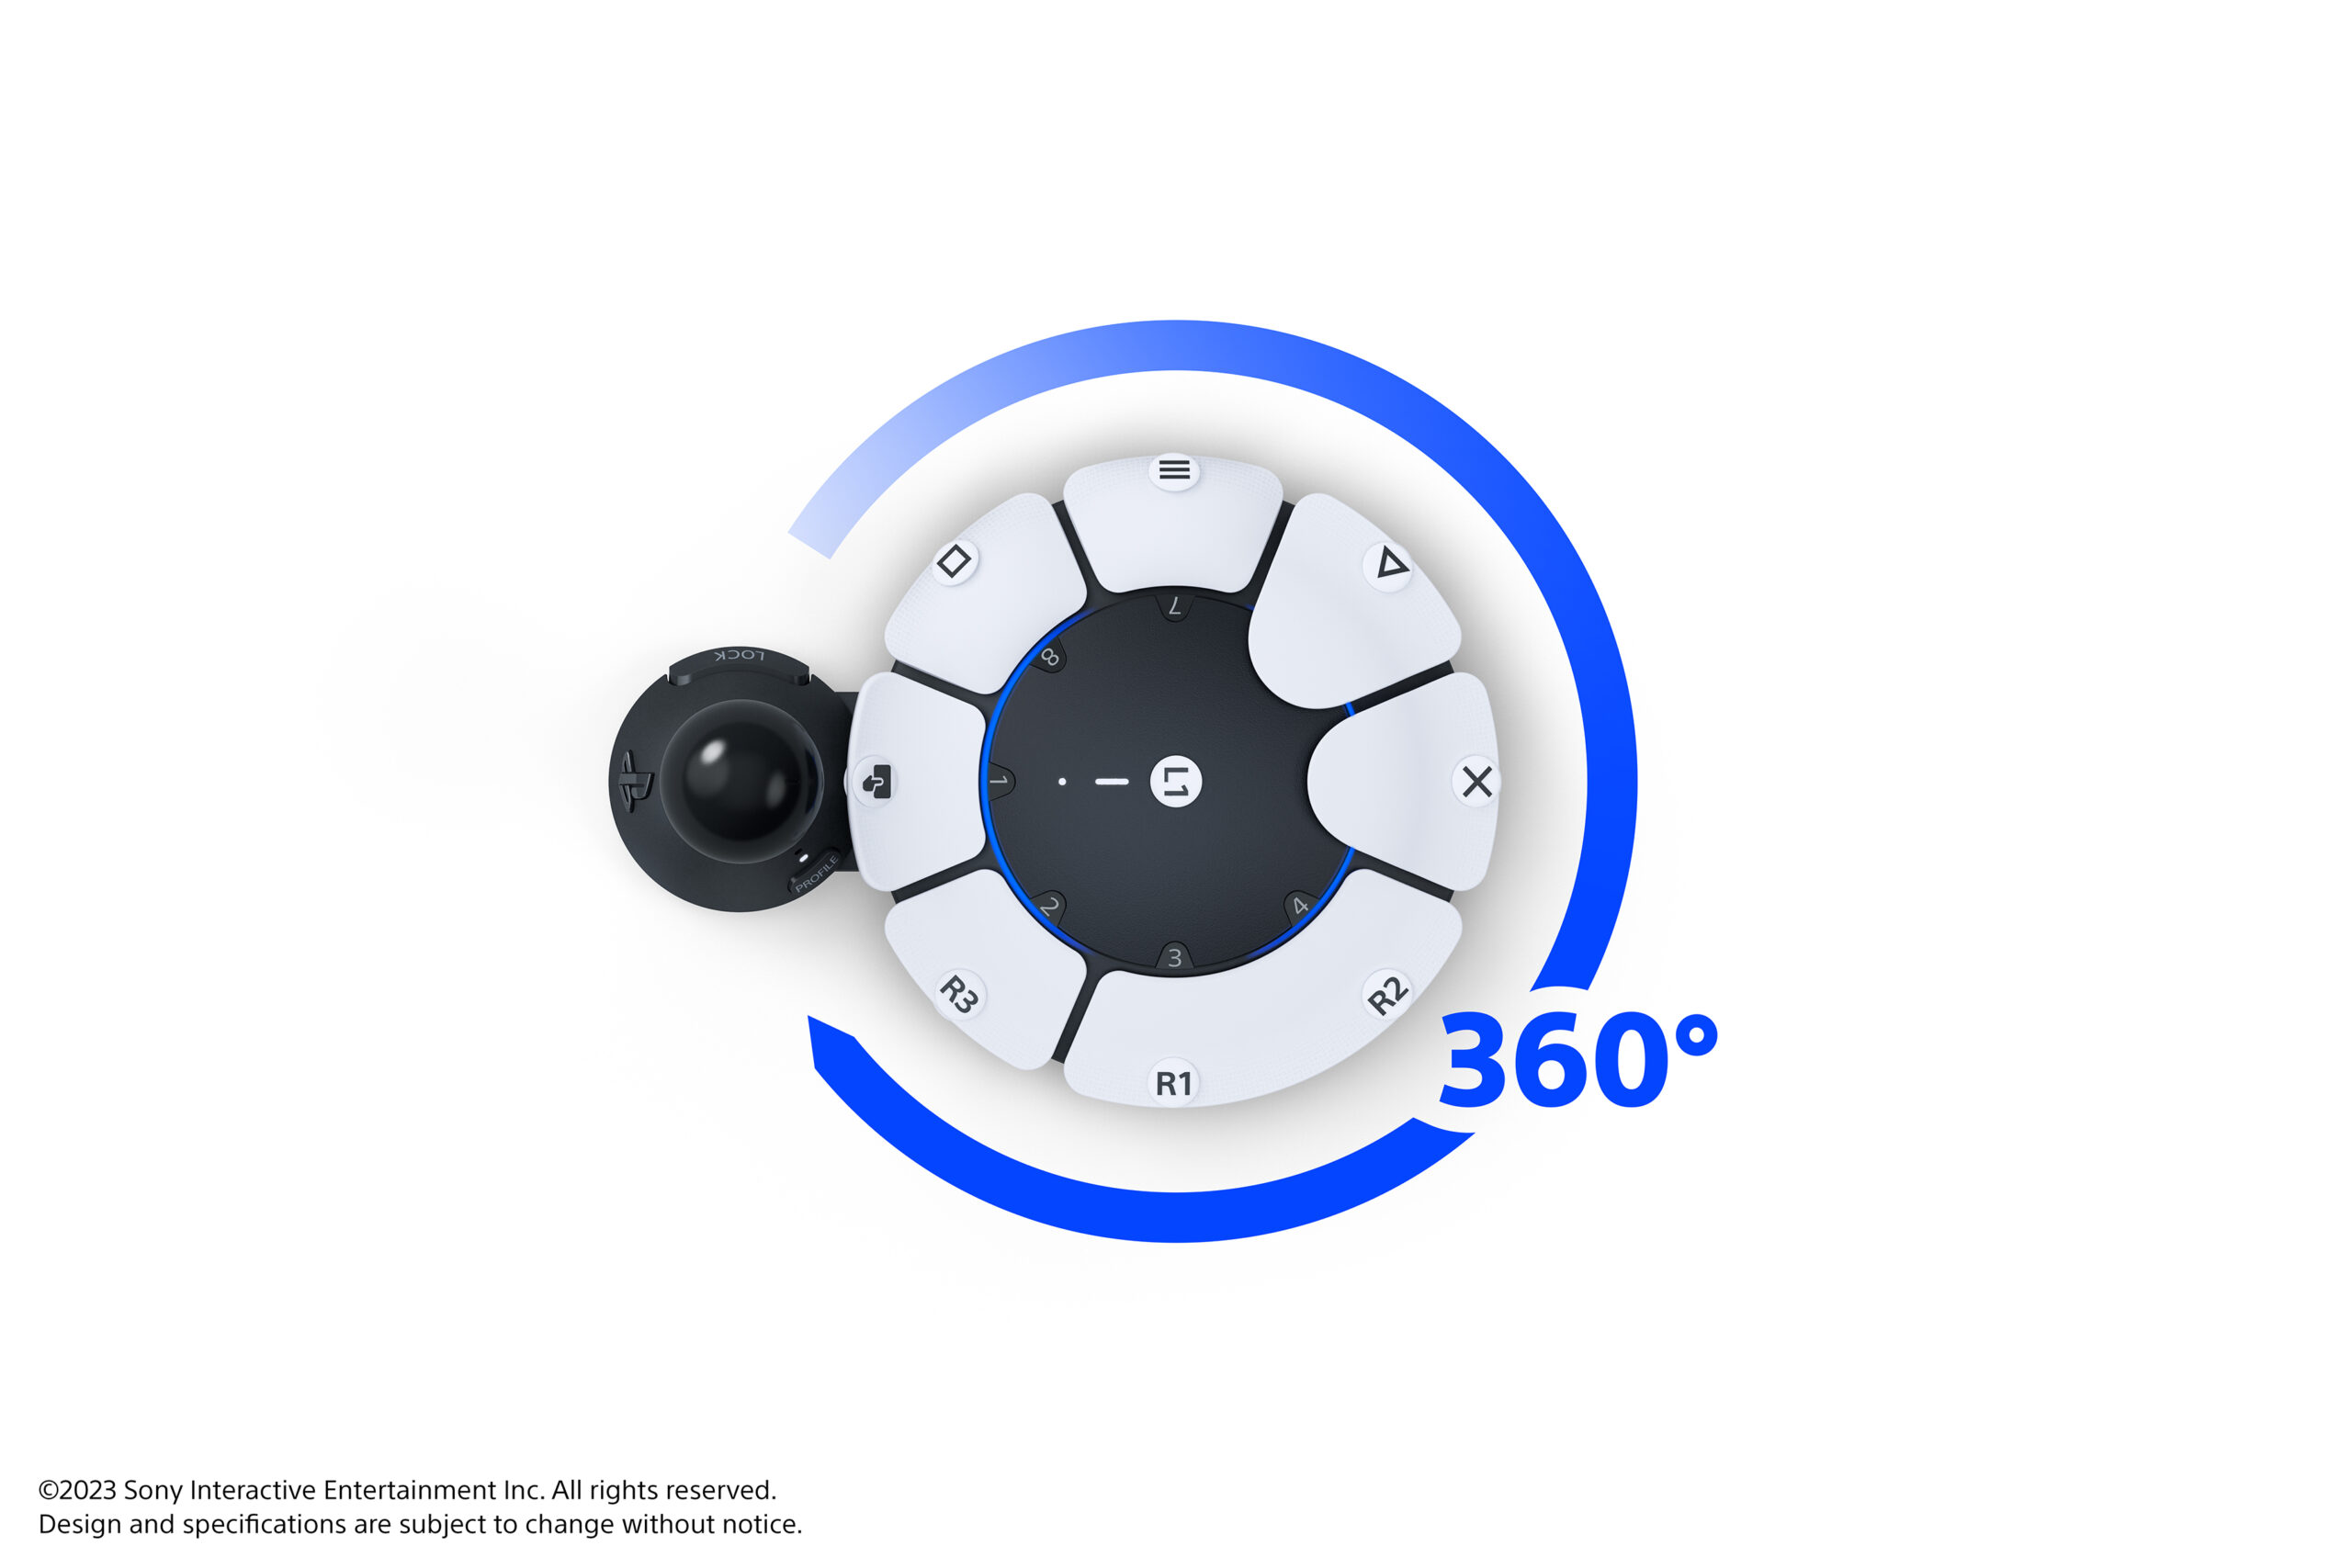  "Abbildung zeigt 360-Grad-Ausrichtungsoptionen für den Access Controller"